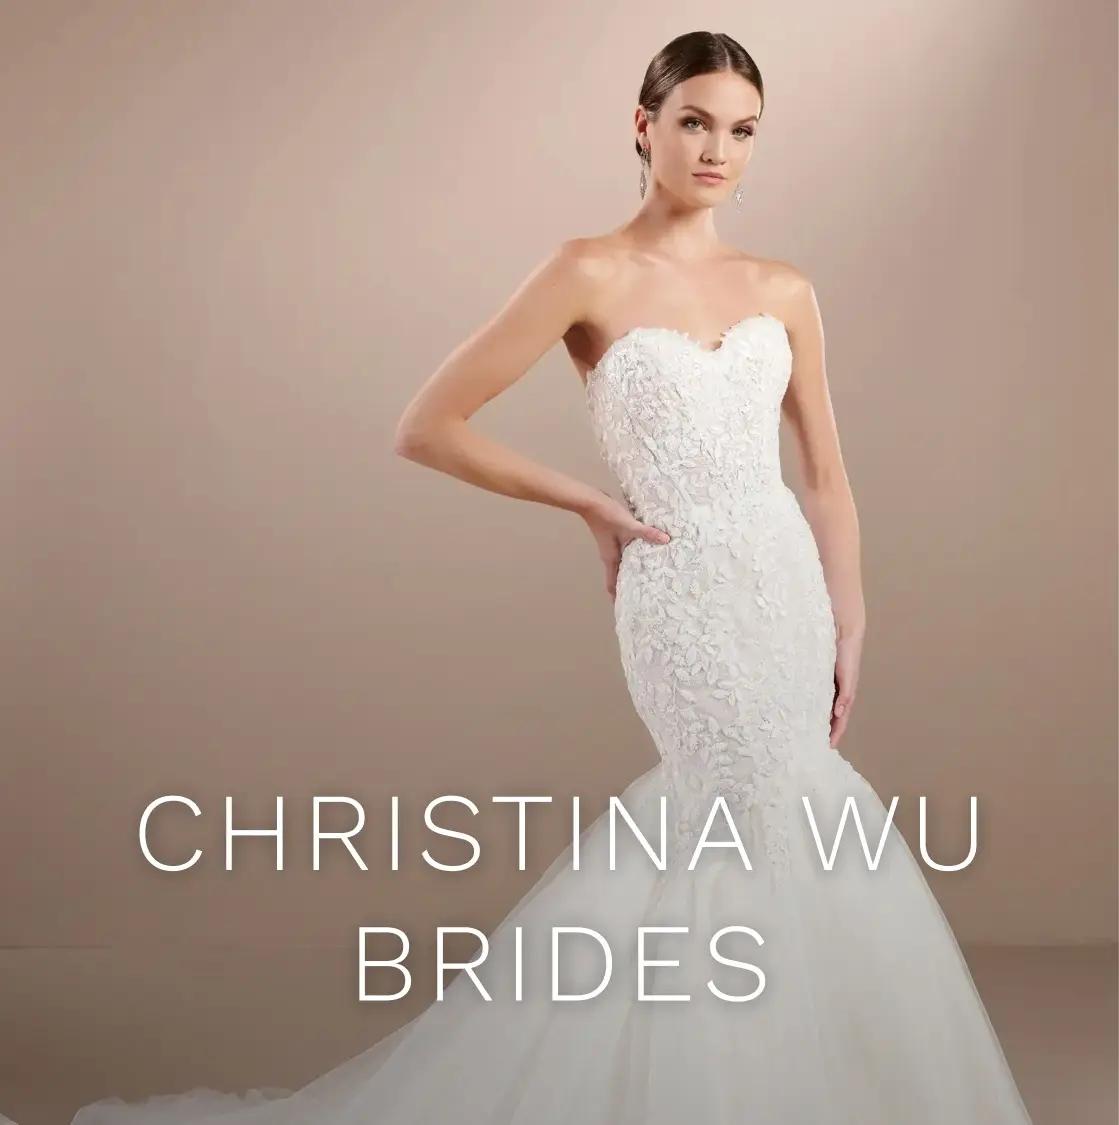 Christina Wu Brides